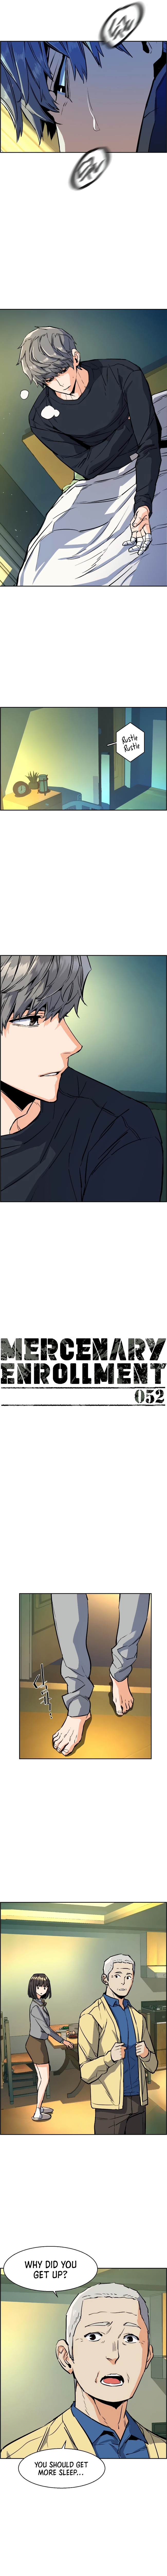 Mercenary Enrollment - Chapter 52 Page 4